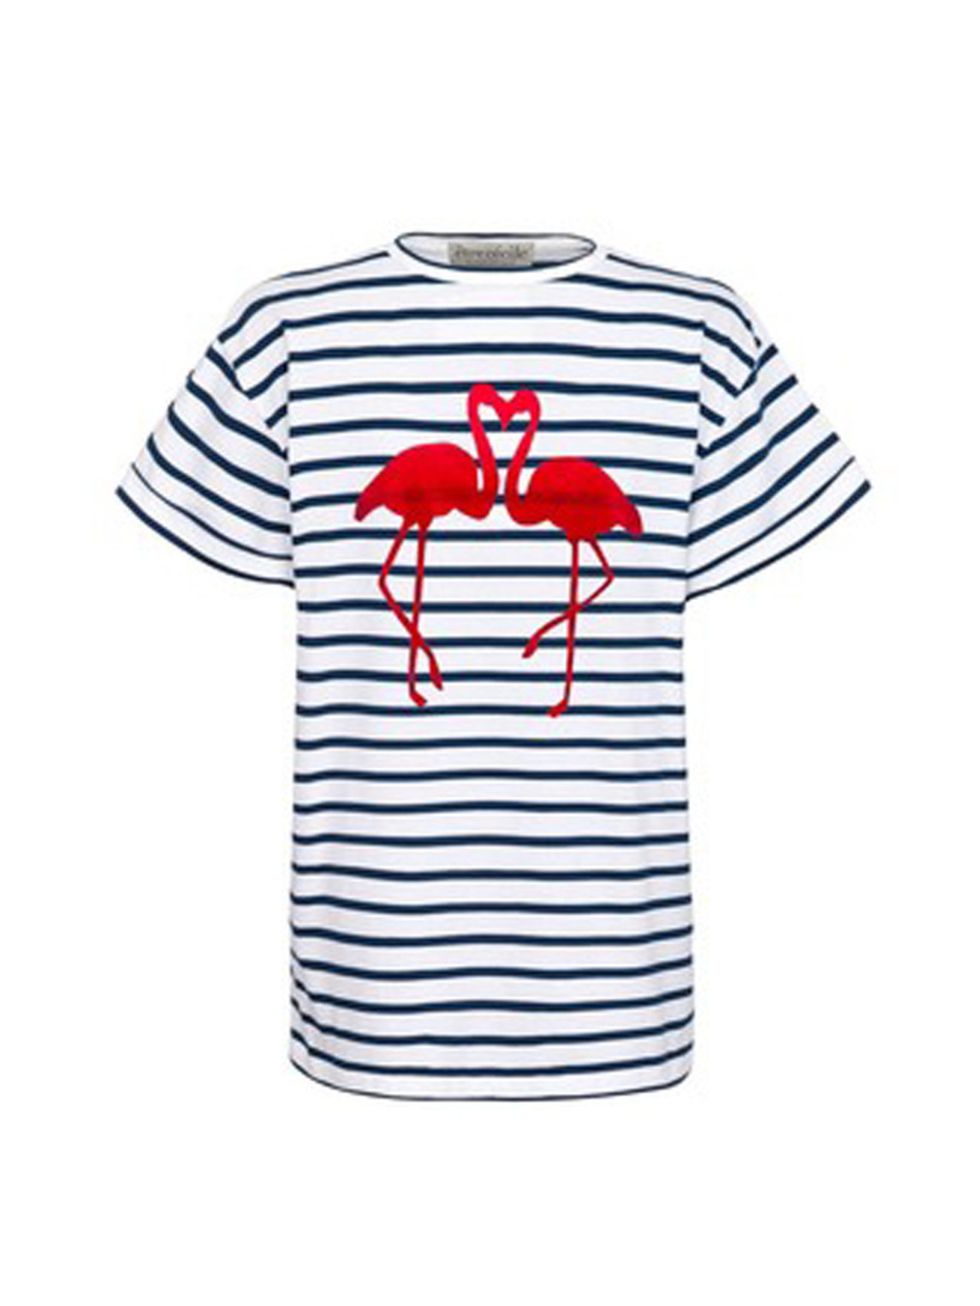 <p><a href="http://www.etrececile.com/flamingo-oversize-t-shirt.html" target="_blank">Etre Cecile</a> flamingo tshirt, £80</p>